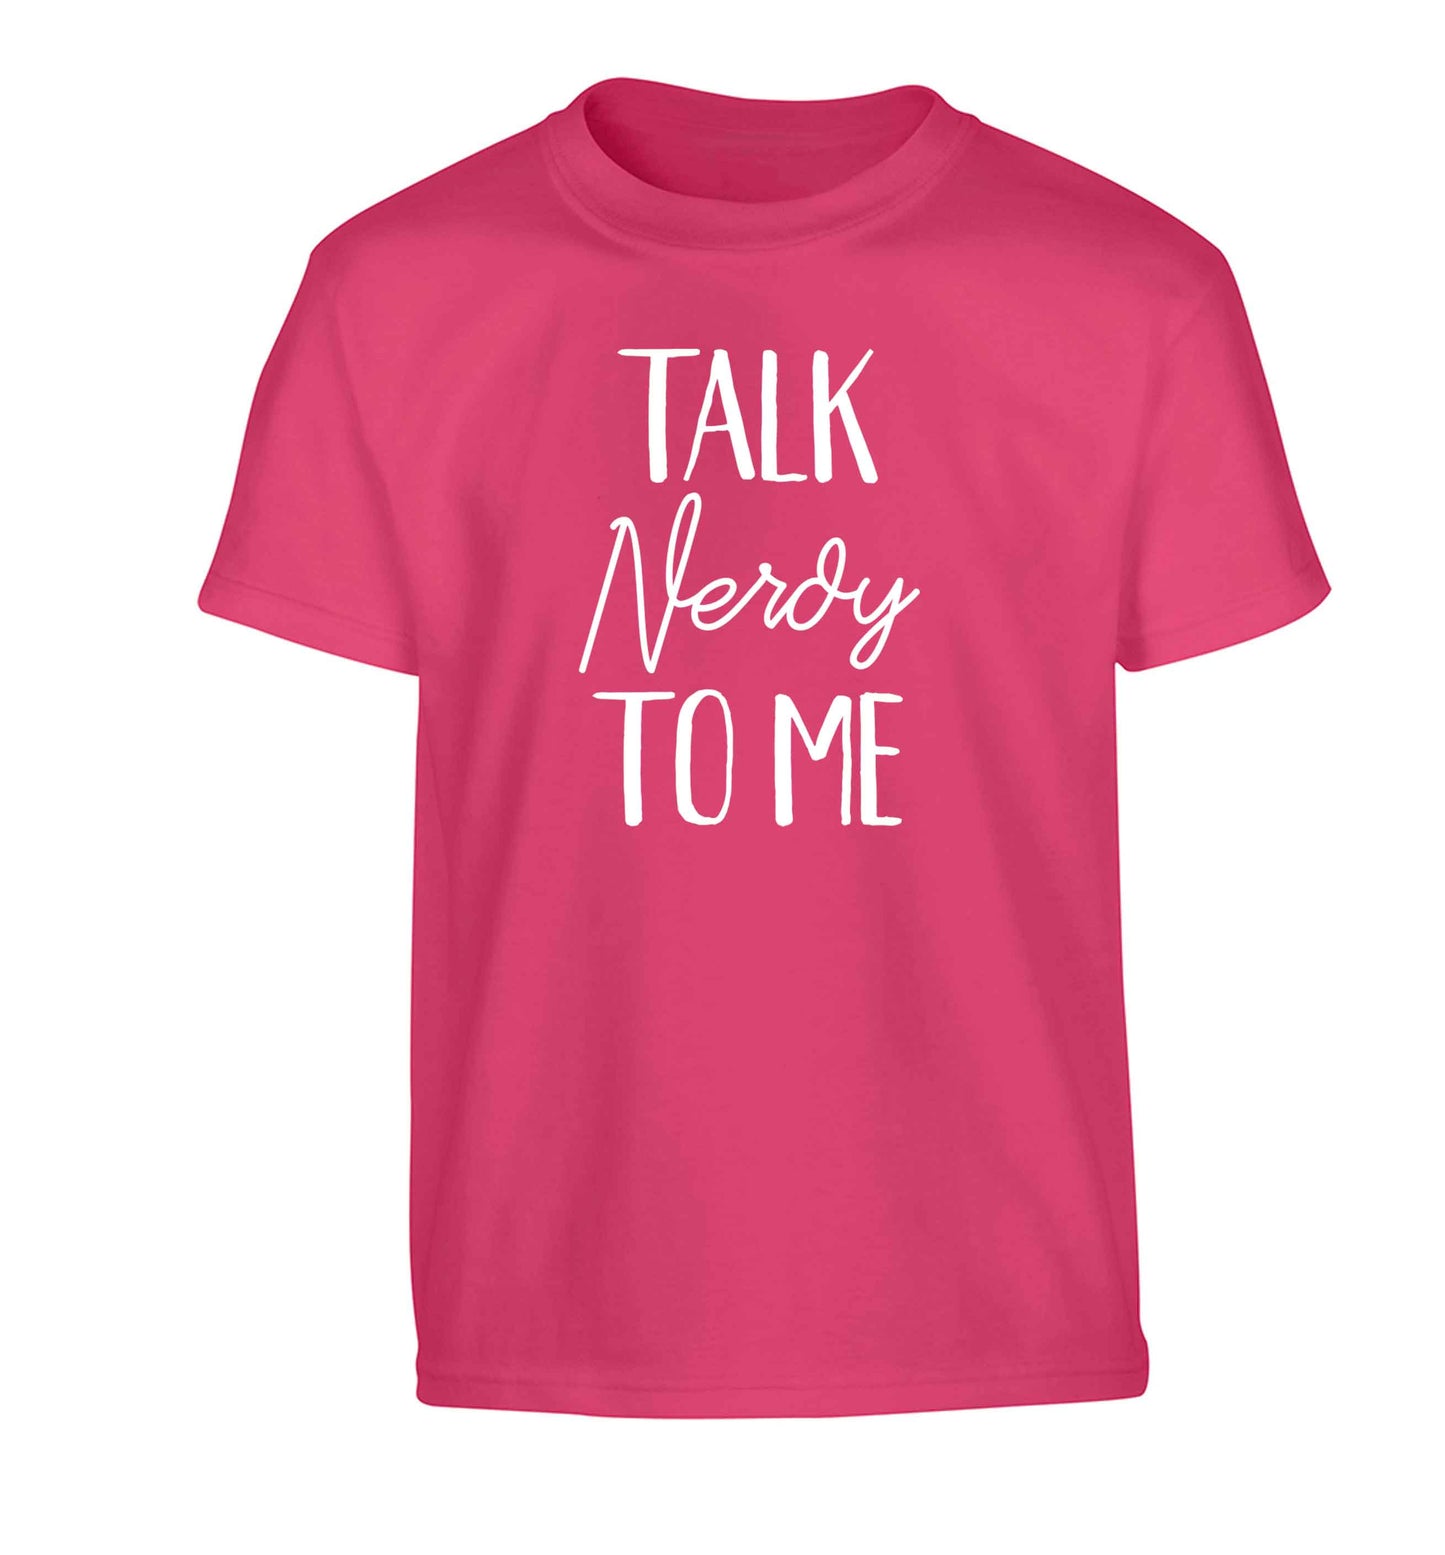 Talk nerdy to me Children's pink Tshirt 12-13 Years